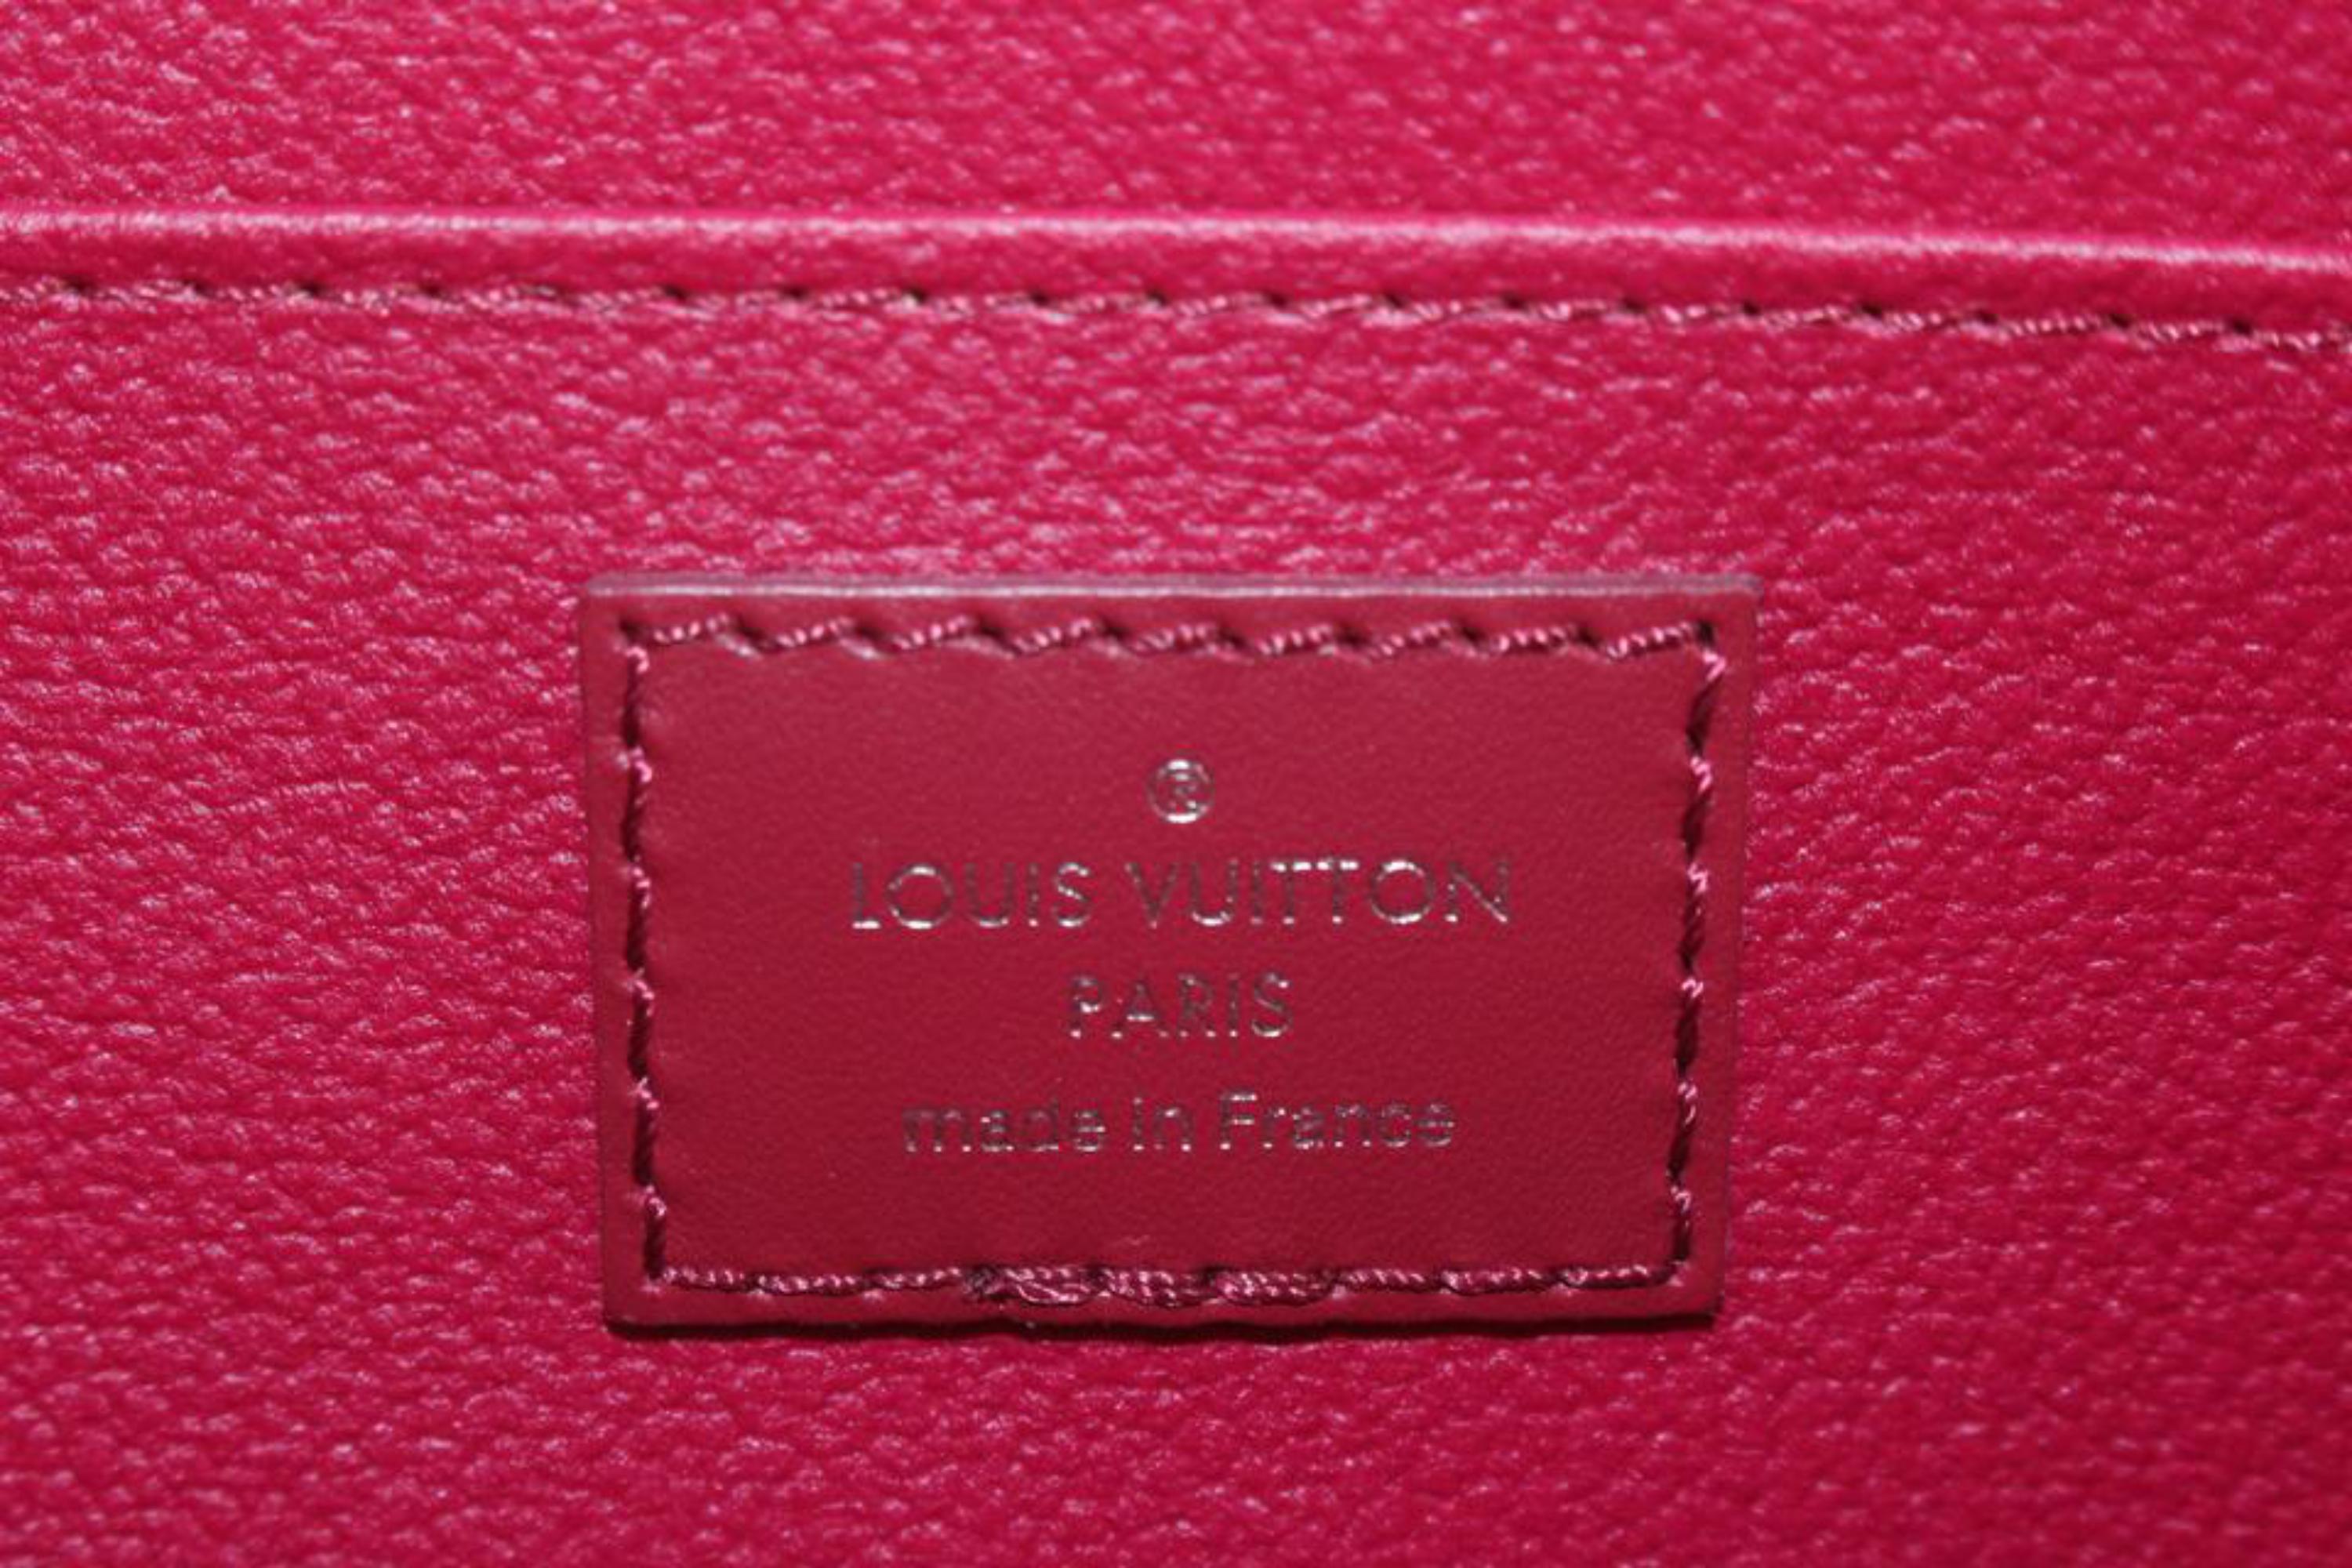 Louis Vuitton Womens Runaway Pink EU 38.5 / UK 5.5 – Luxe Collective